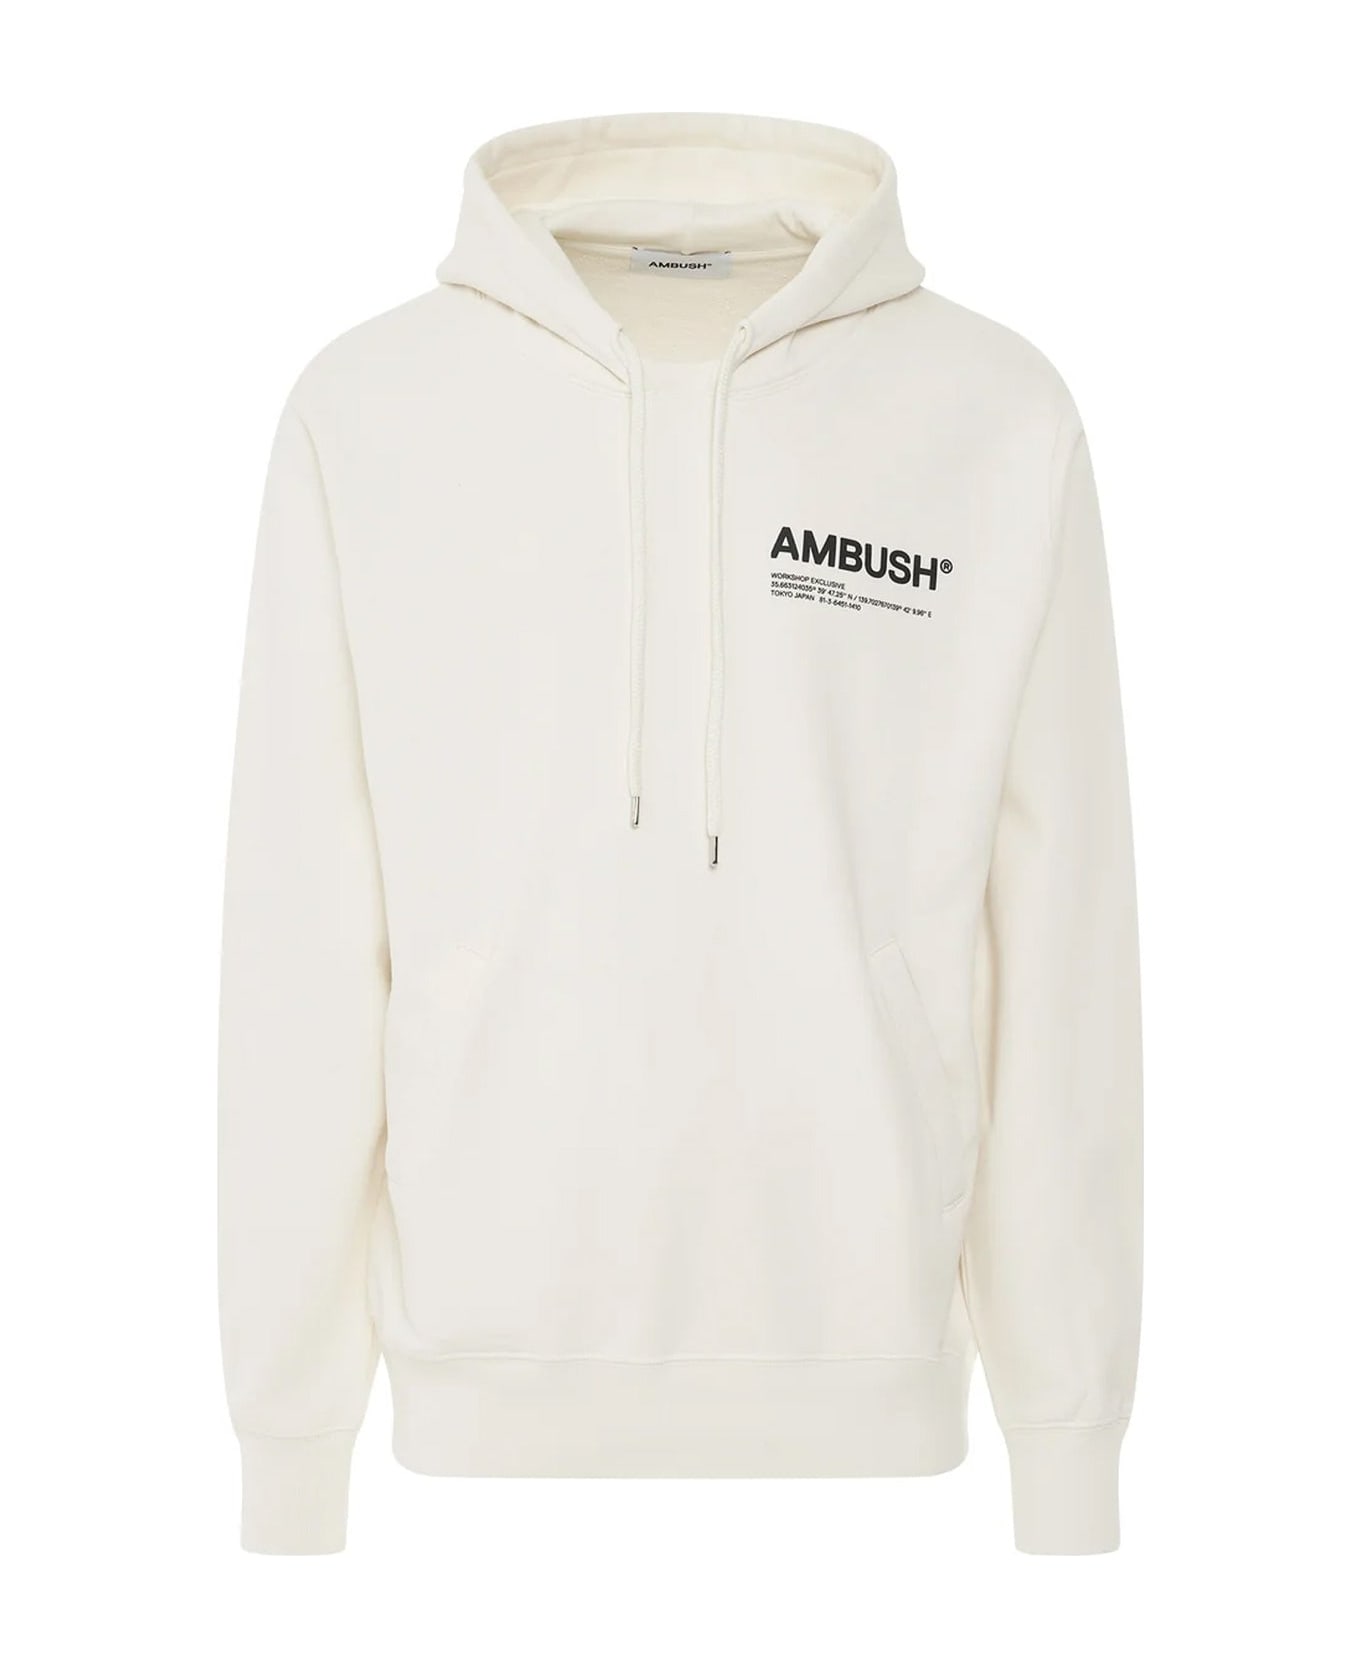 AMBUSH Hooded Sweatshirt - White